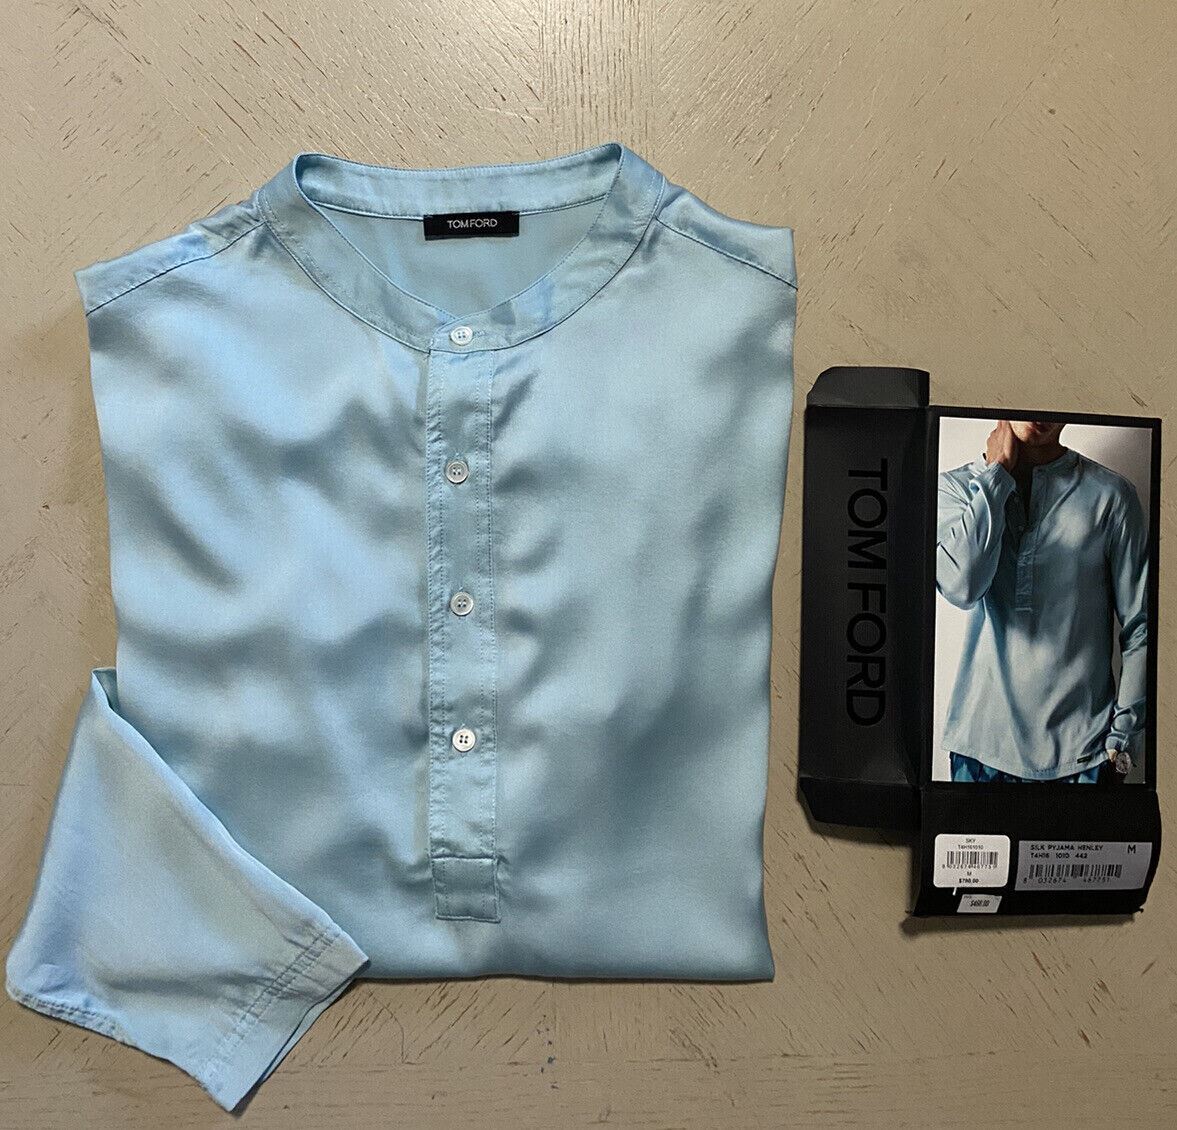 NWT $790 TOM FORD Мужская шелковая рубашка на пуговицах синего цвета, Италия